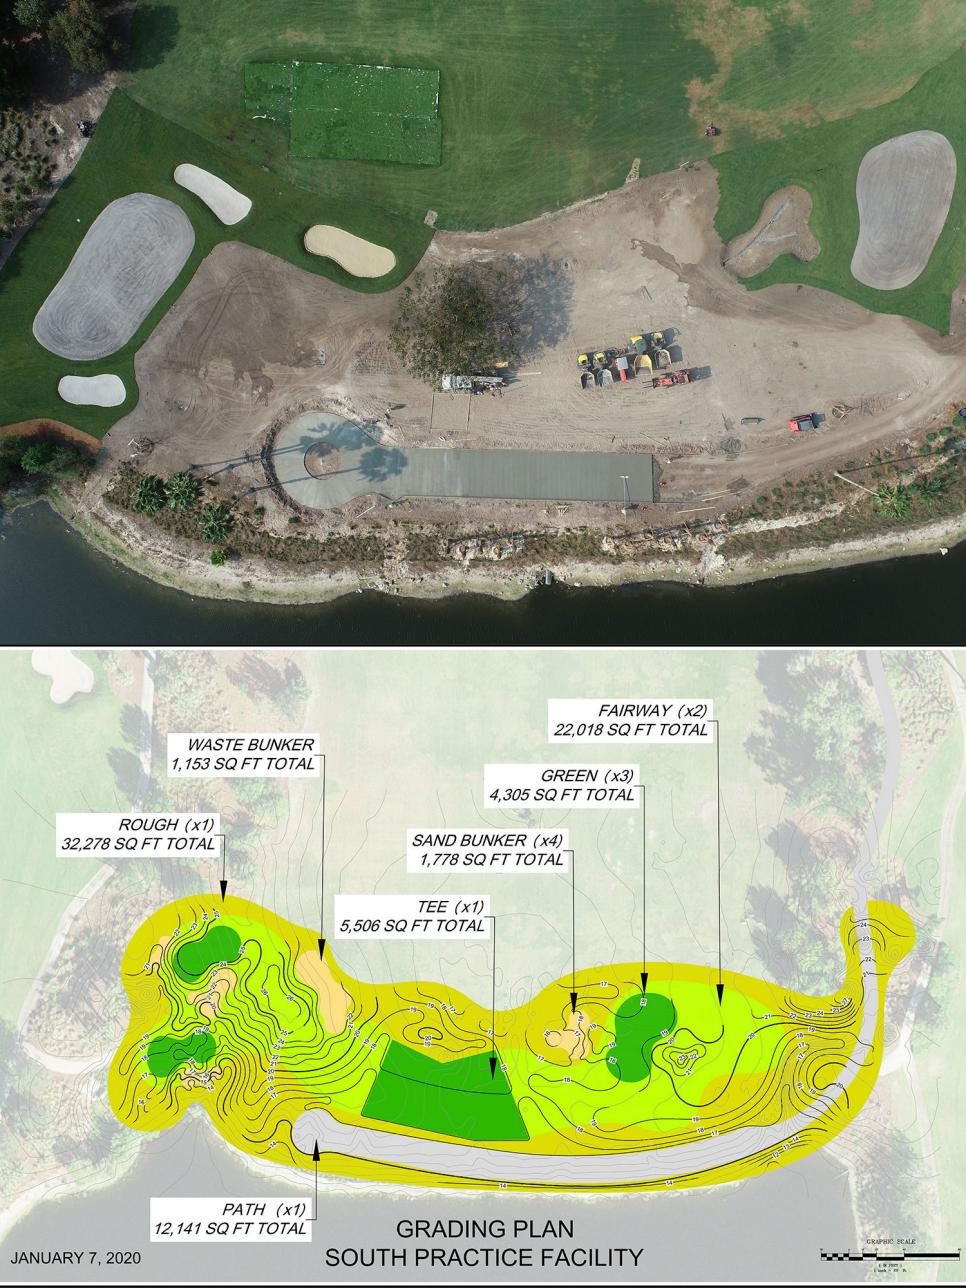 /content/dam/images/golfdigest/fullset/2020/05/25/michael-hurdzan-architecture-collage-aerial-drawing.jpg